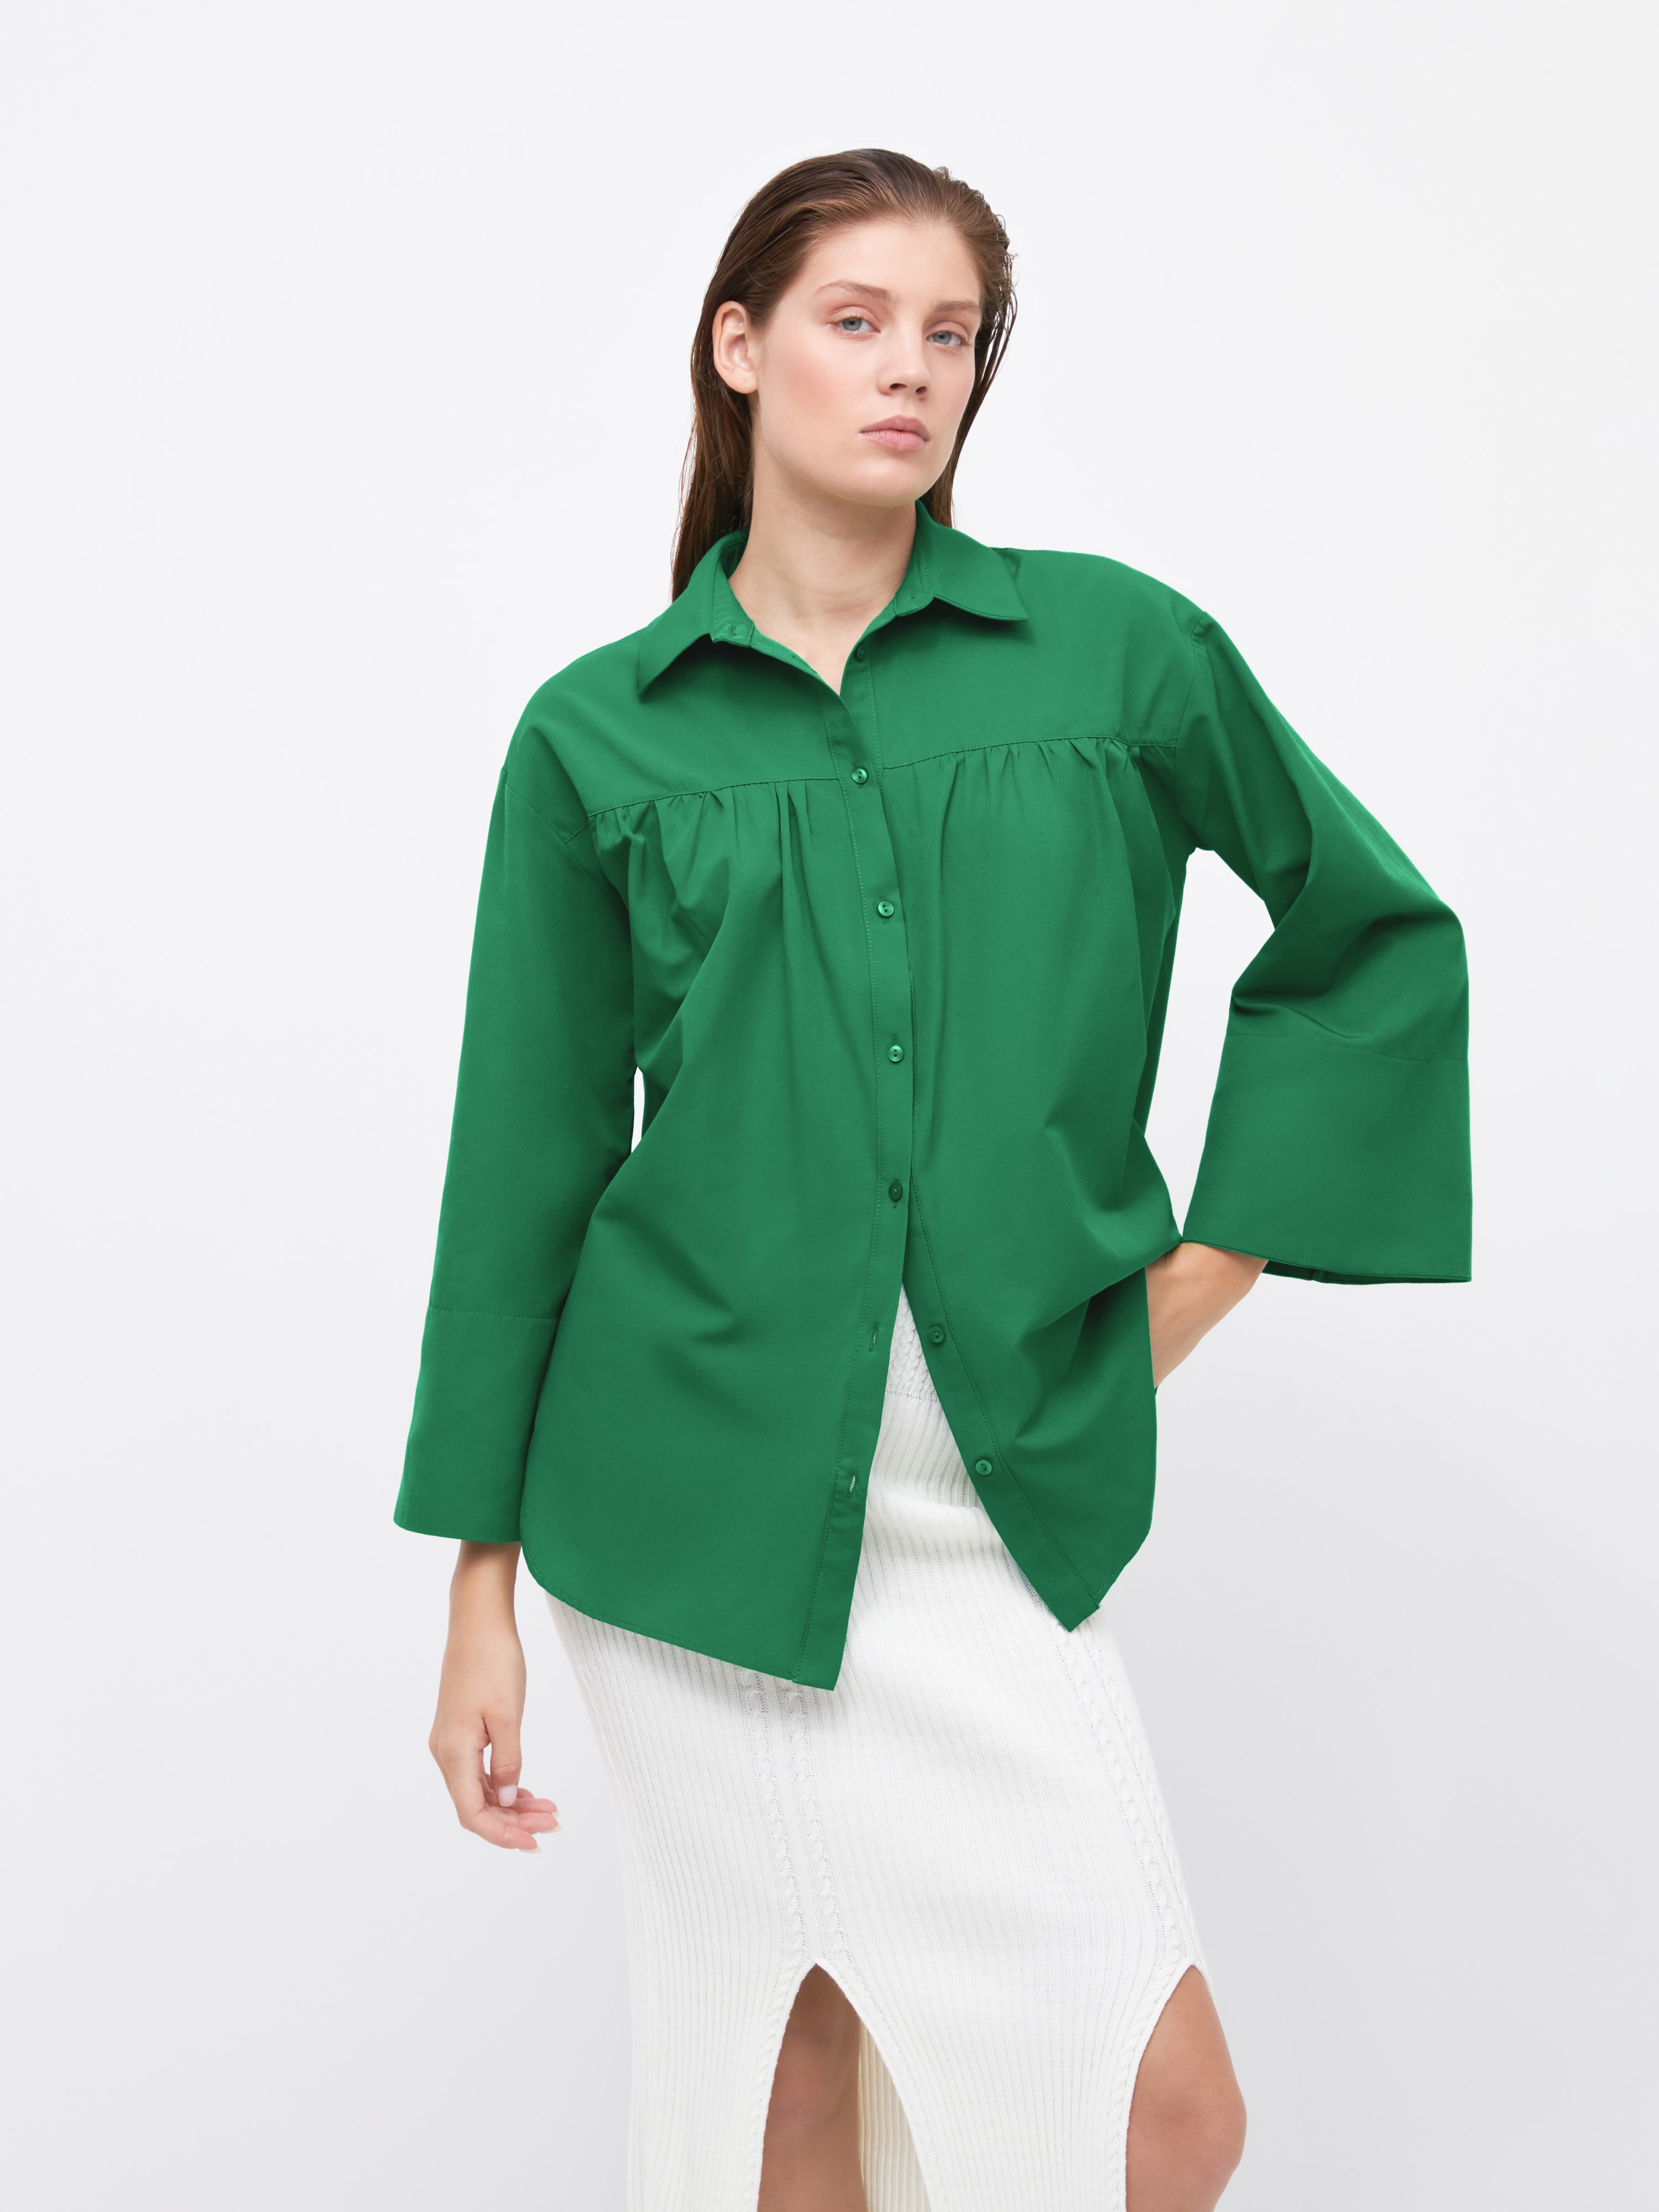 Рубашка женская Arive ARV-WS-10521-008 зеленая L